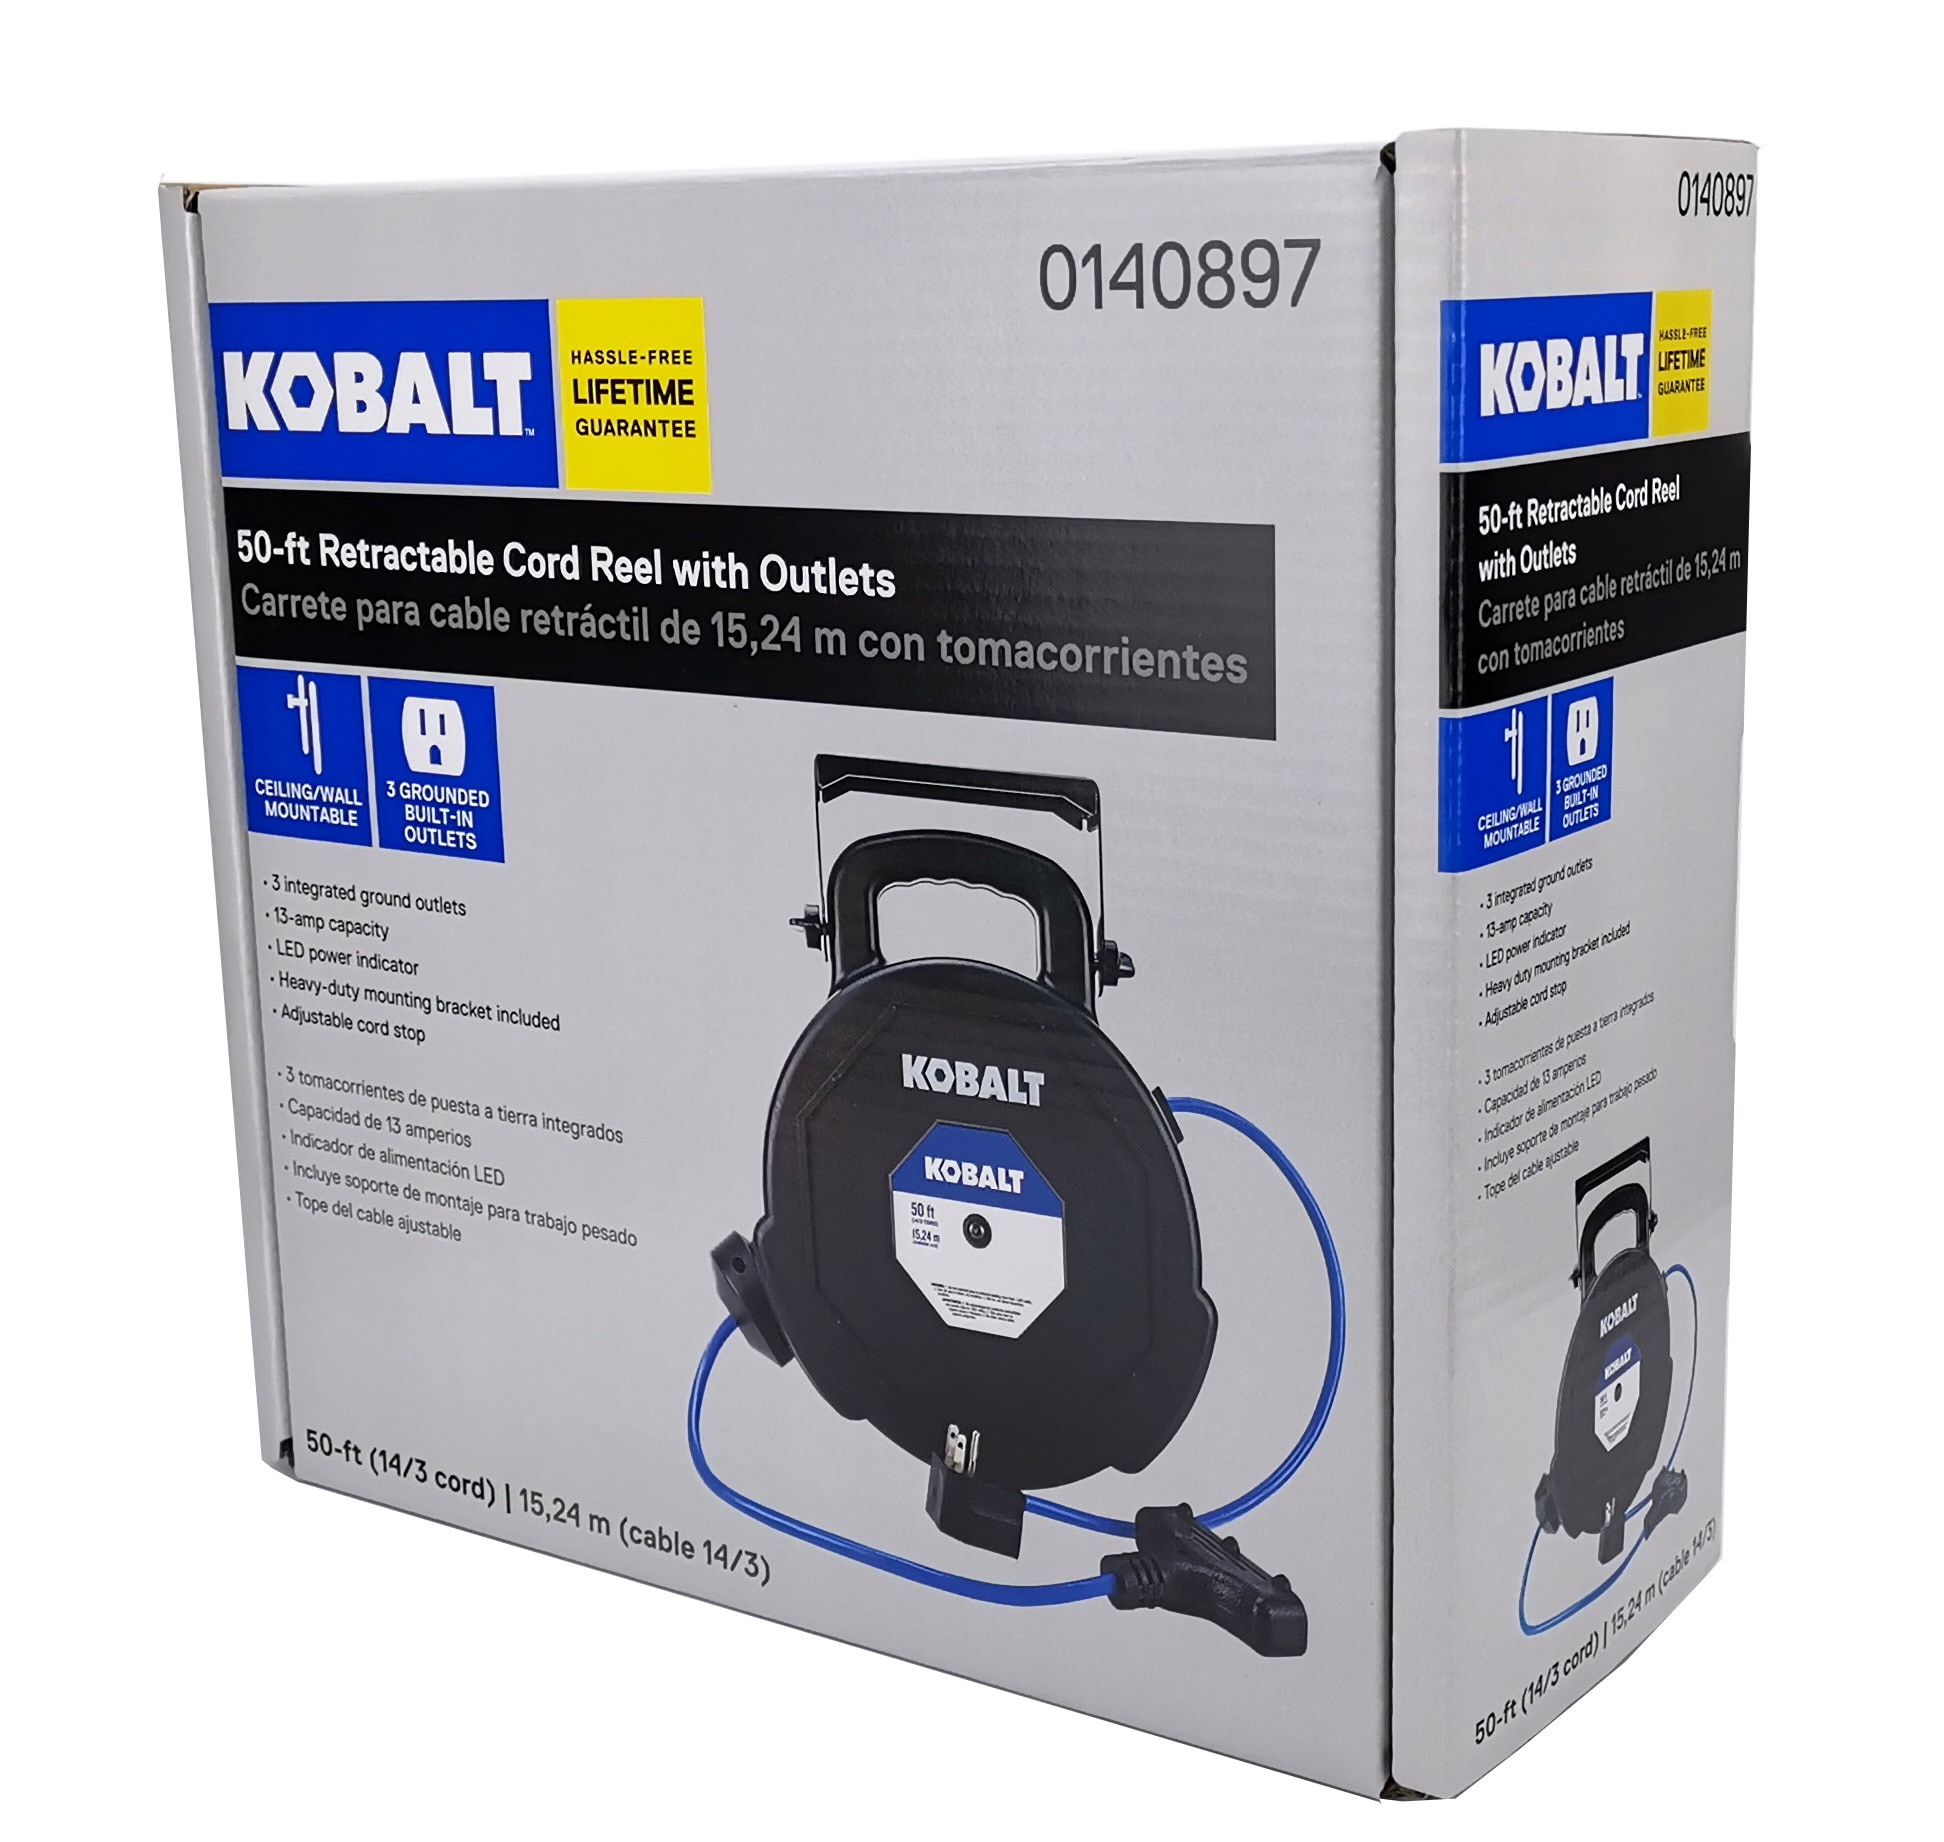 Kobalt Kobalt 50 Ft. Retractable Cord Reel at